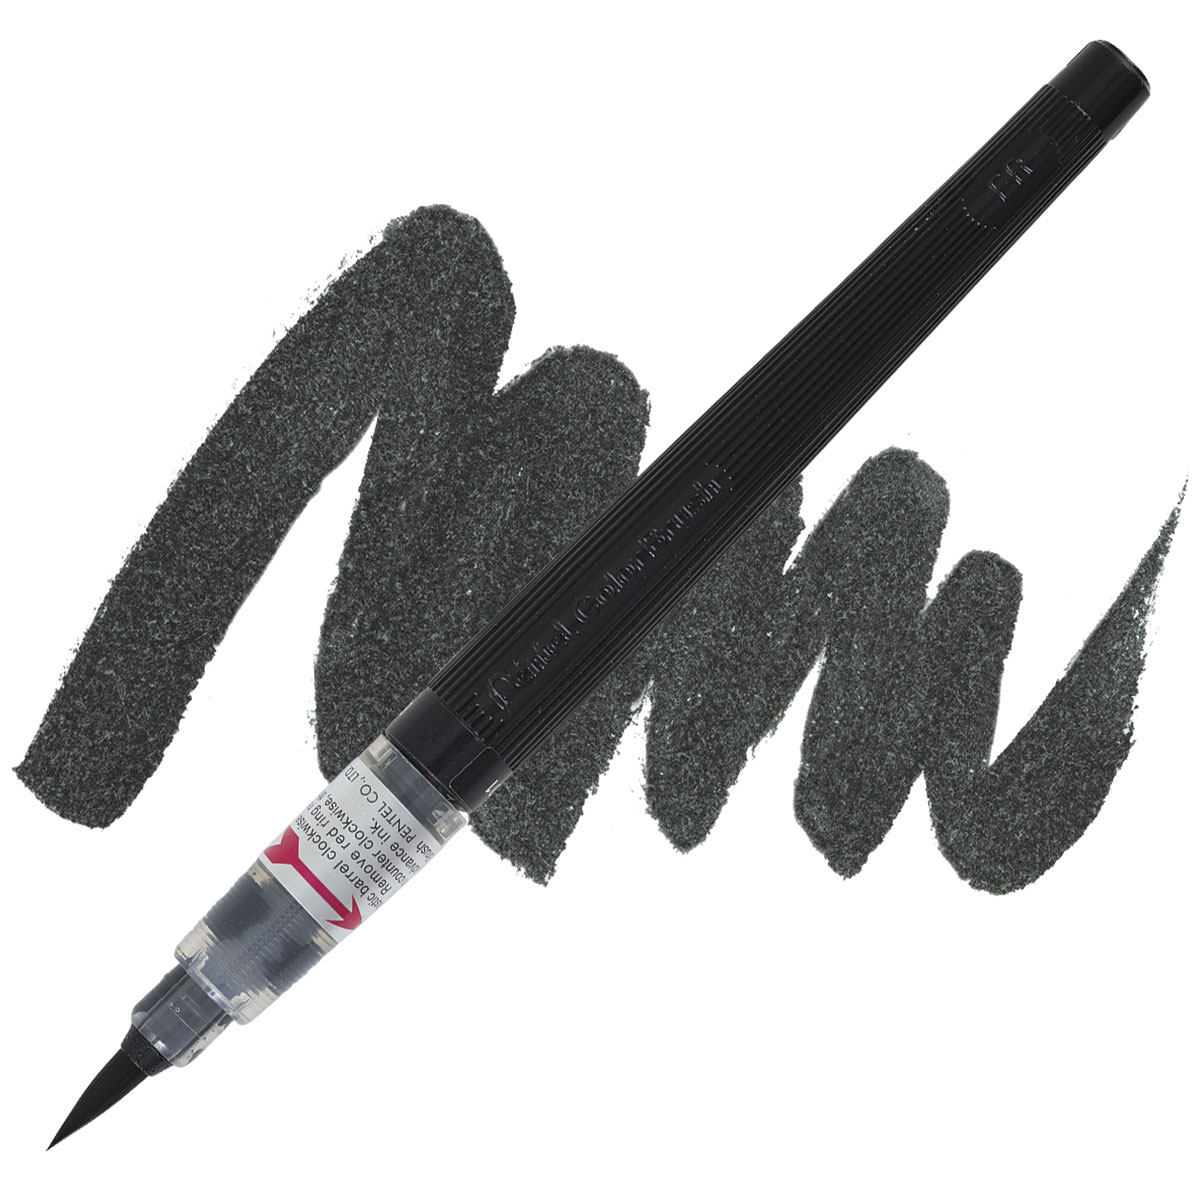 Pentel Arts Pigment Ink Color Brush Pen and Refills